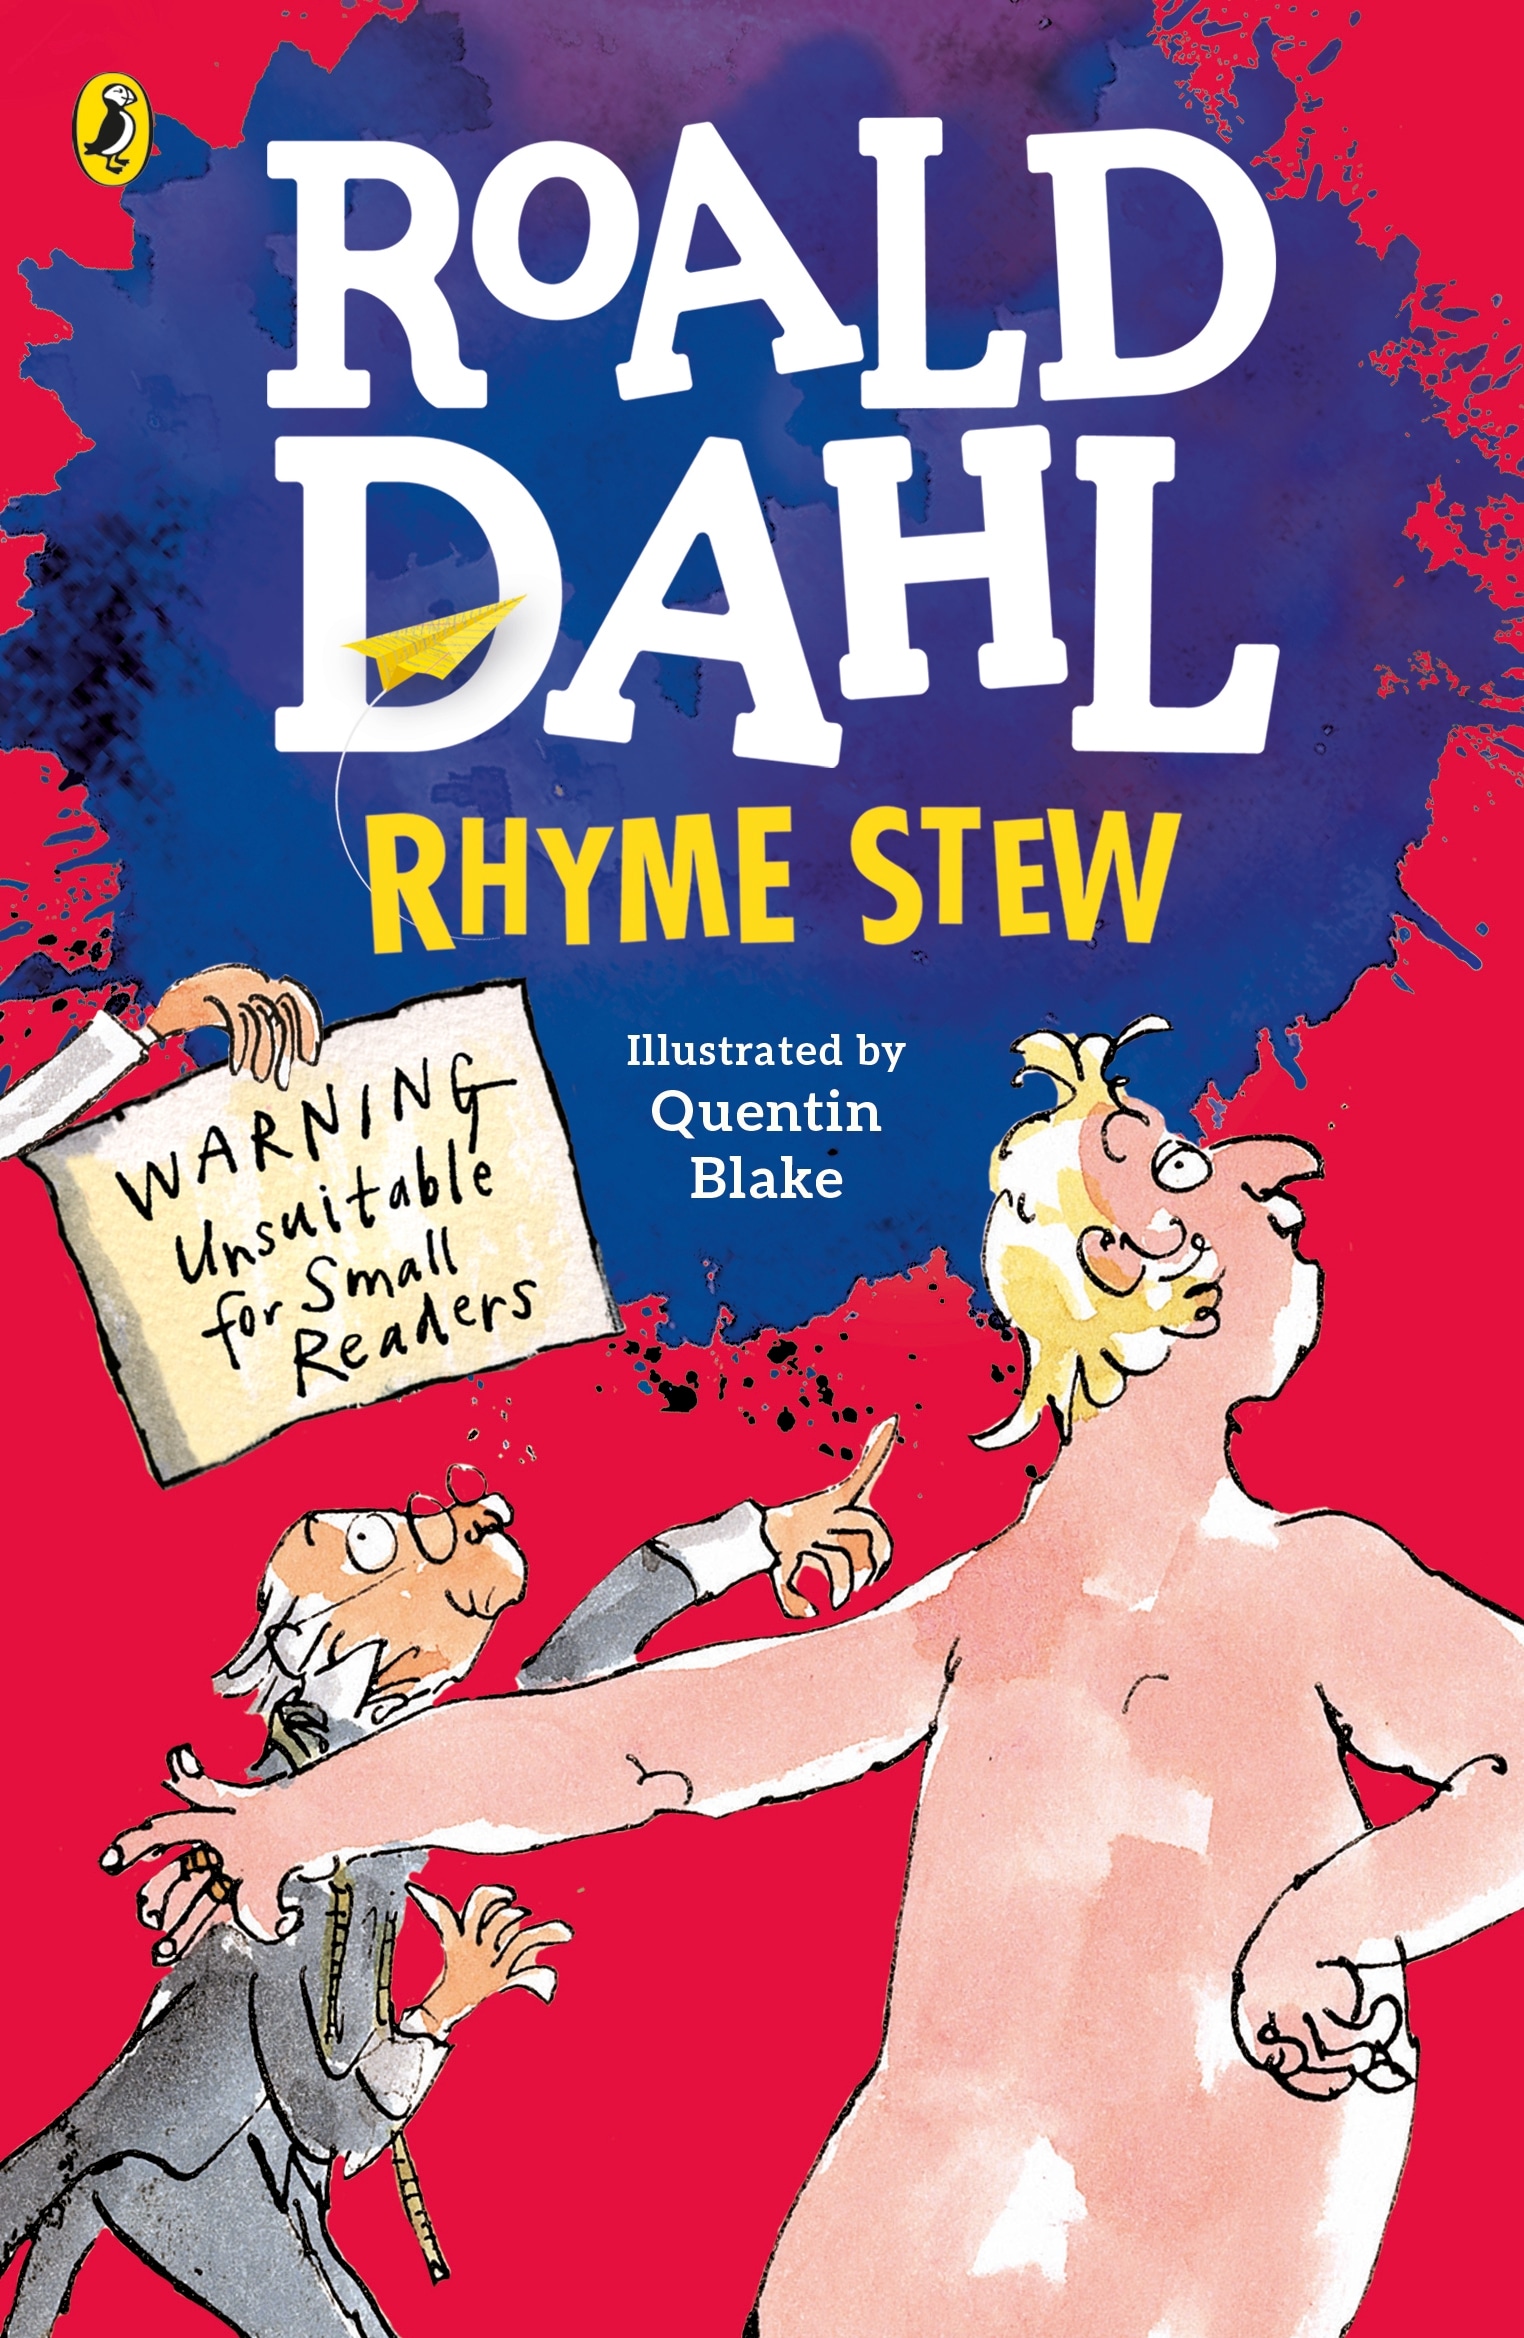 Book “Rhyme Stew” by Roald Dahl — January 5, 2017